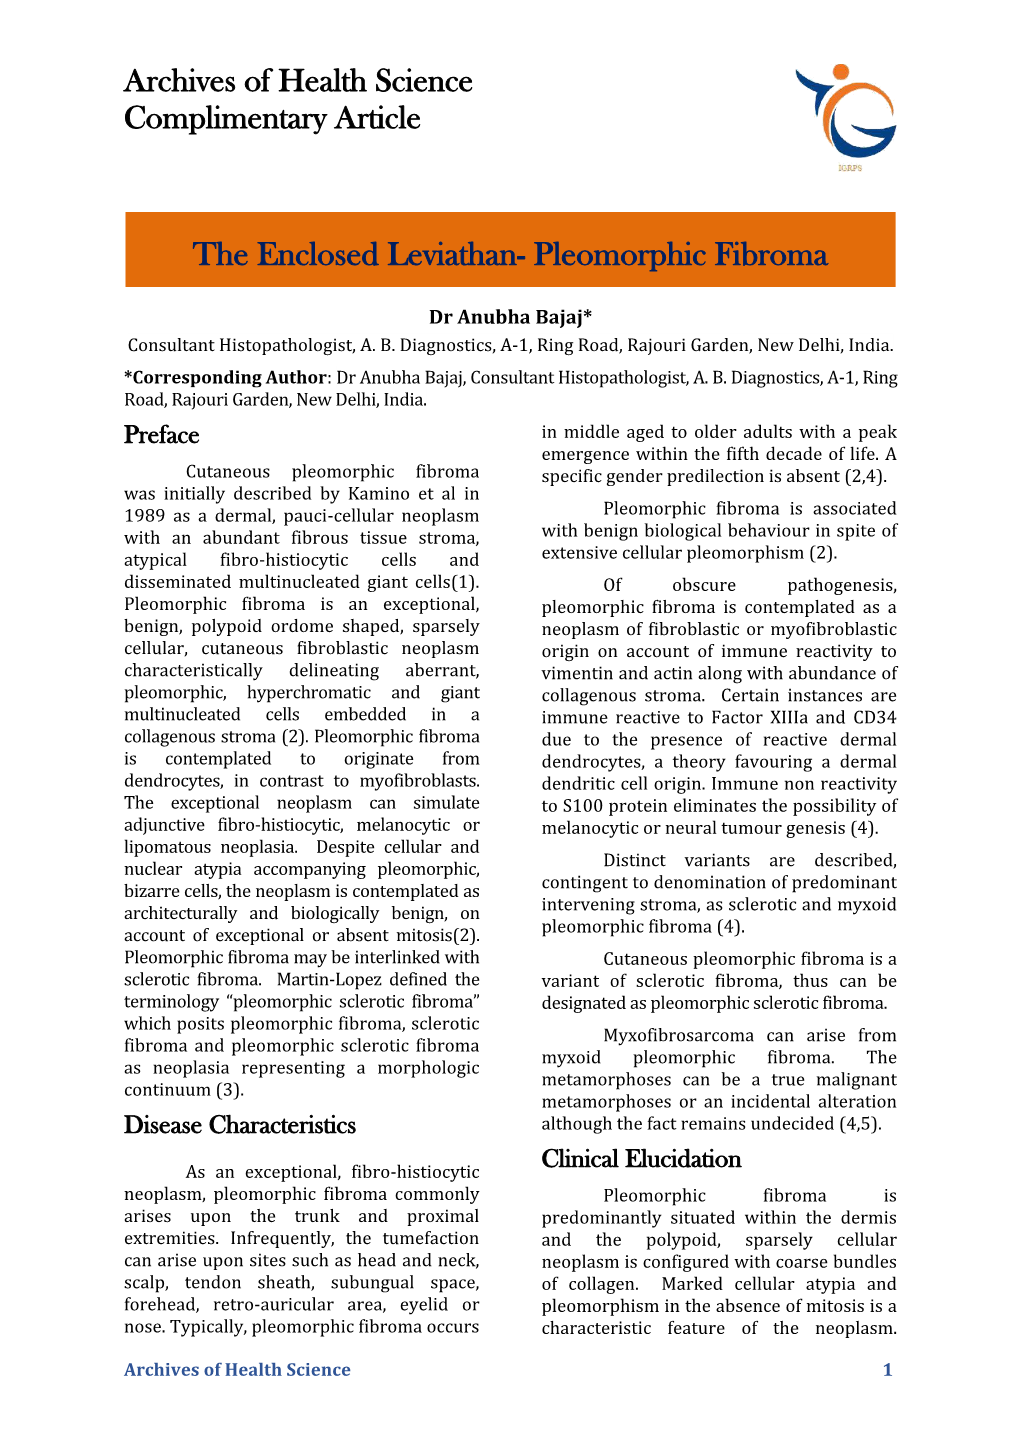 The Enclosed Leviathan- Pleomorphic Fibroma